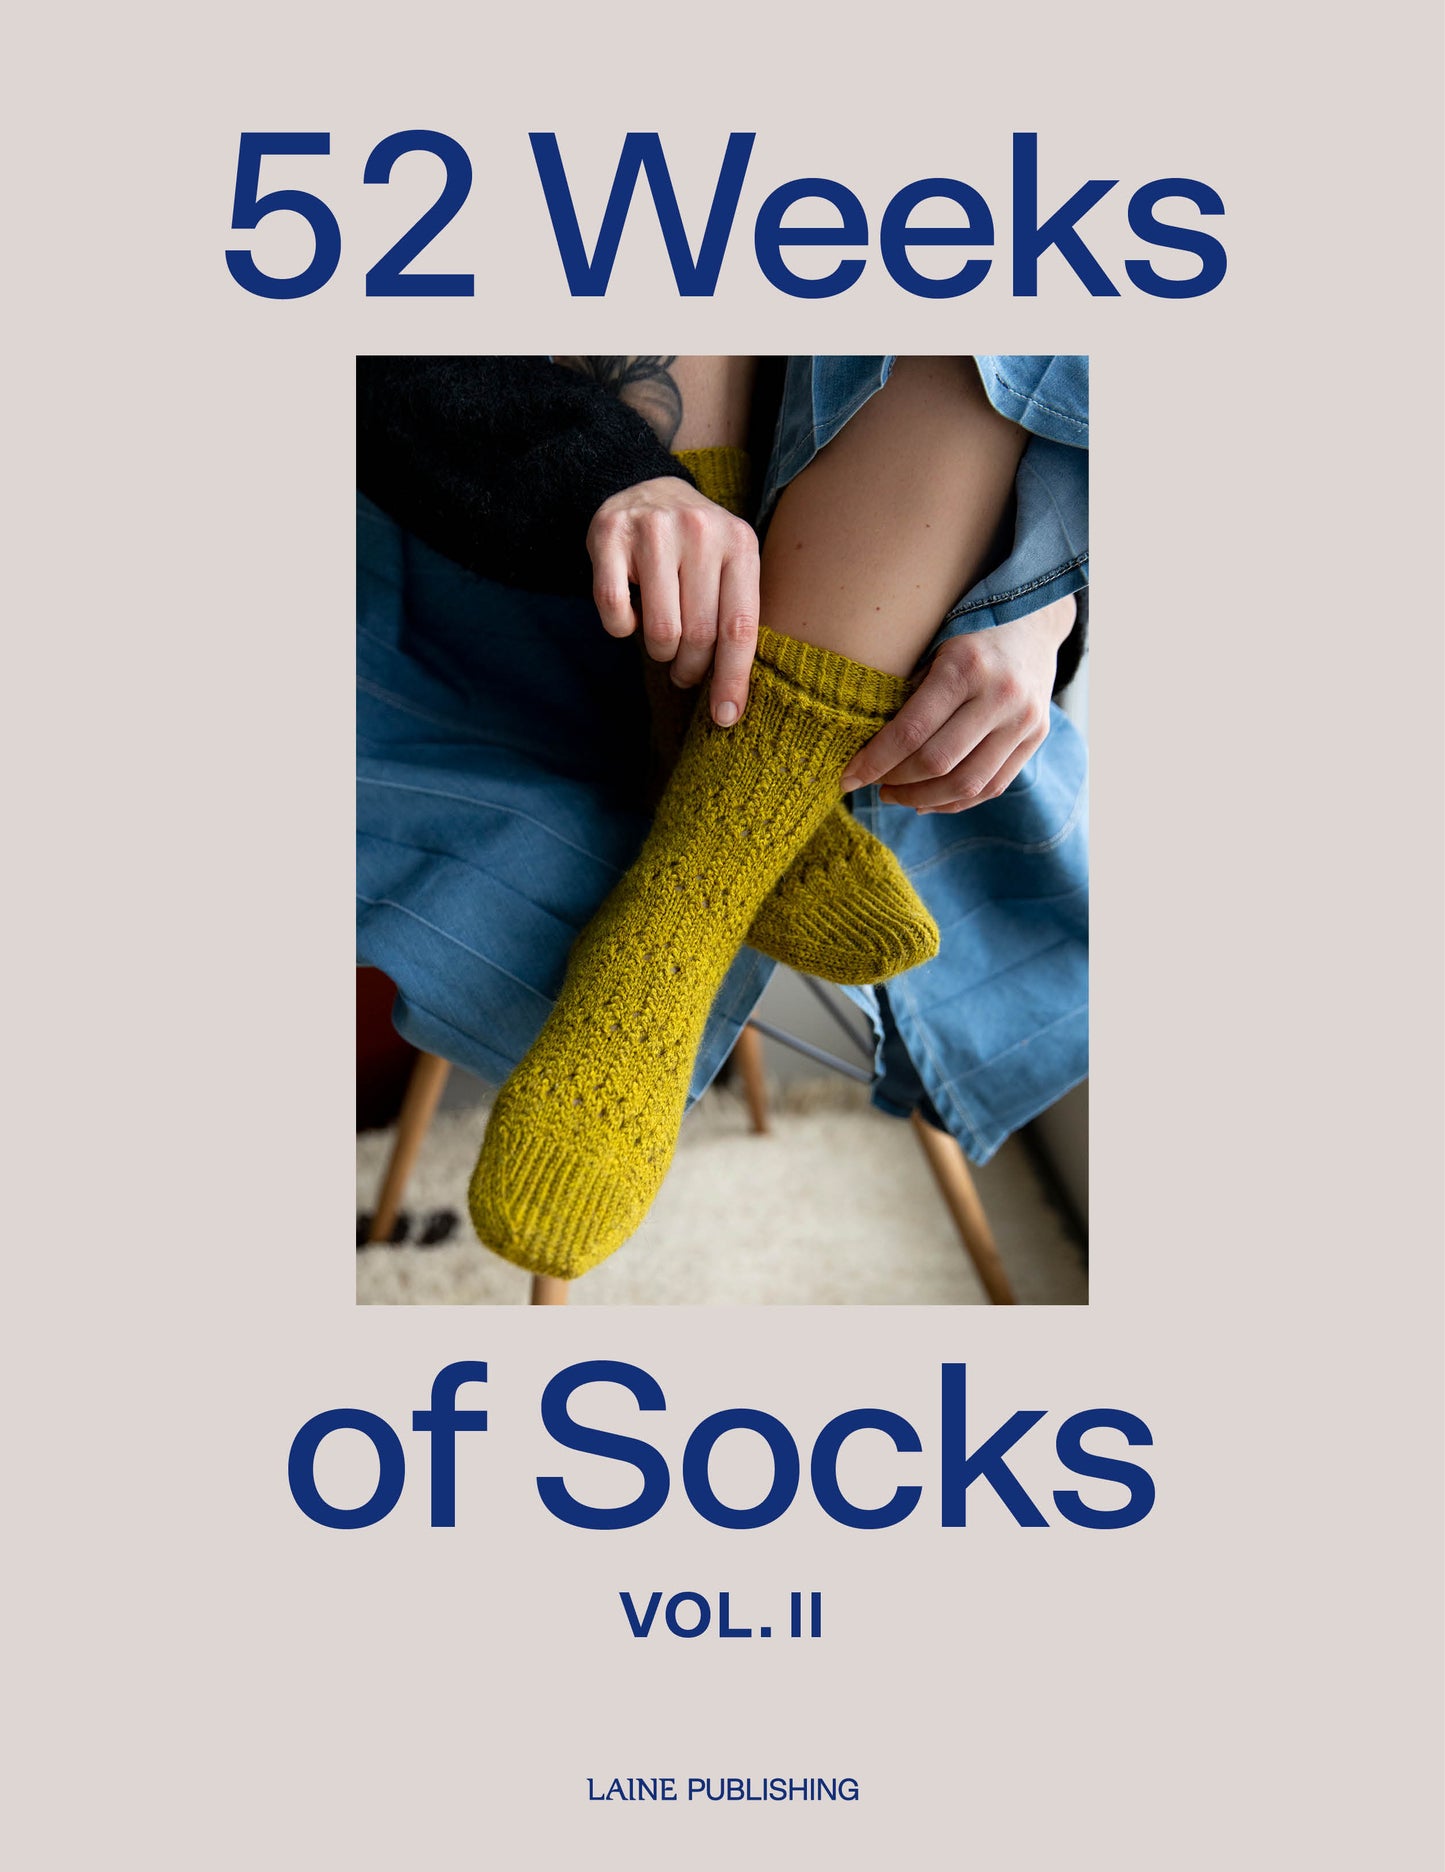 52 Weeks of Socks VOL. ll